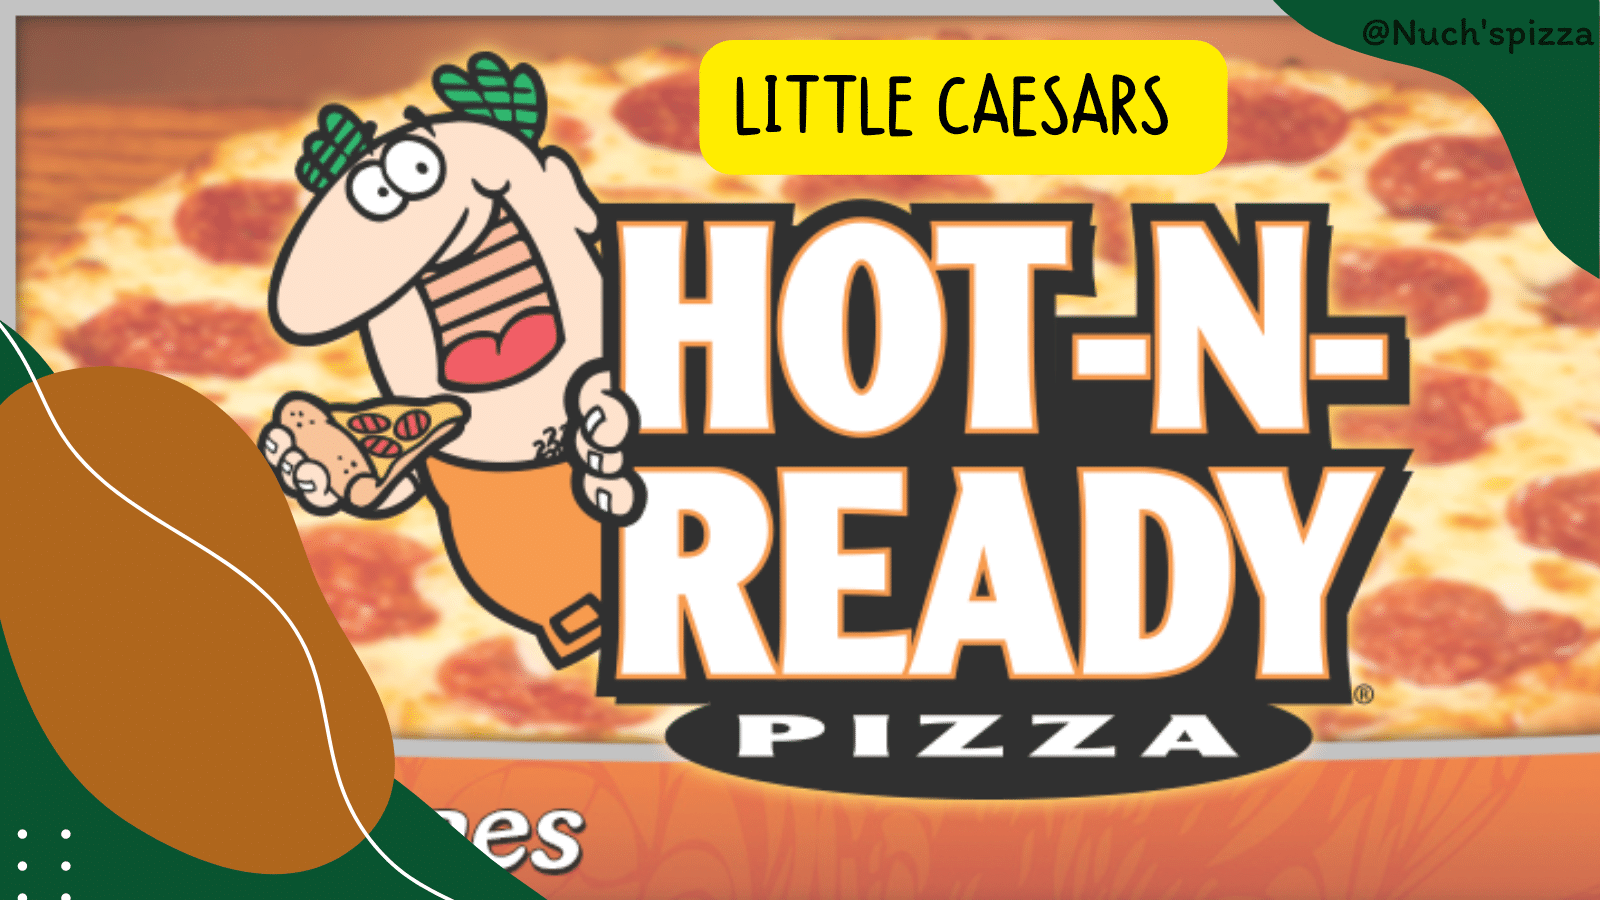 Little Caesars hot and ready menu